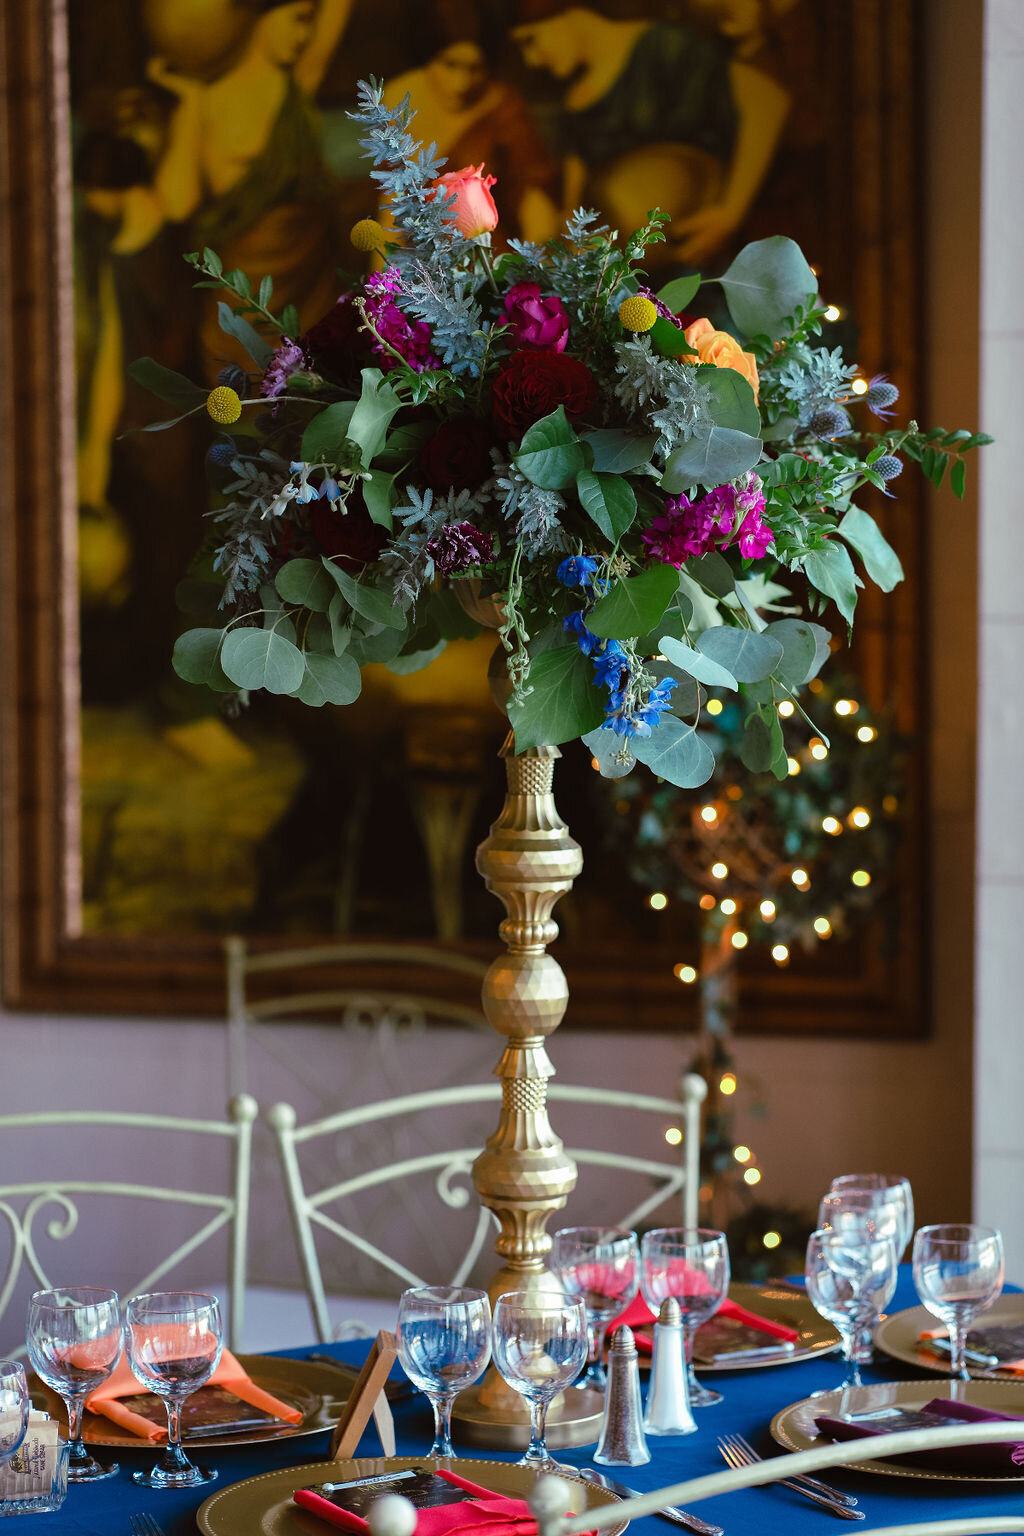 Vibrant centerpiece for a wedding reception table.